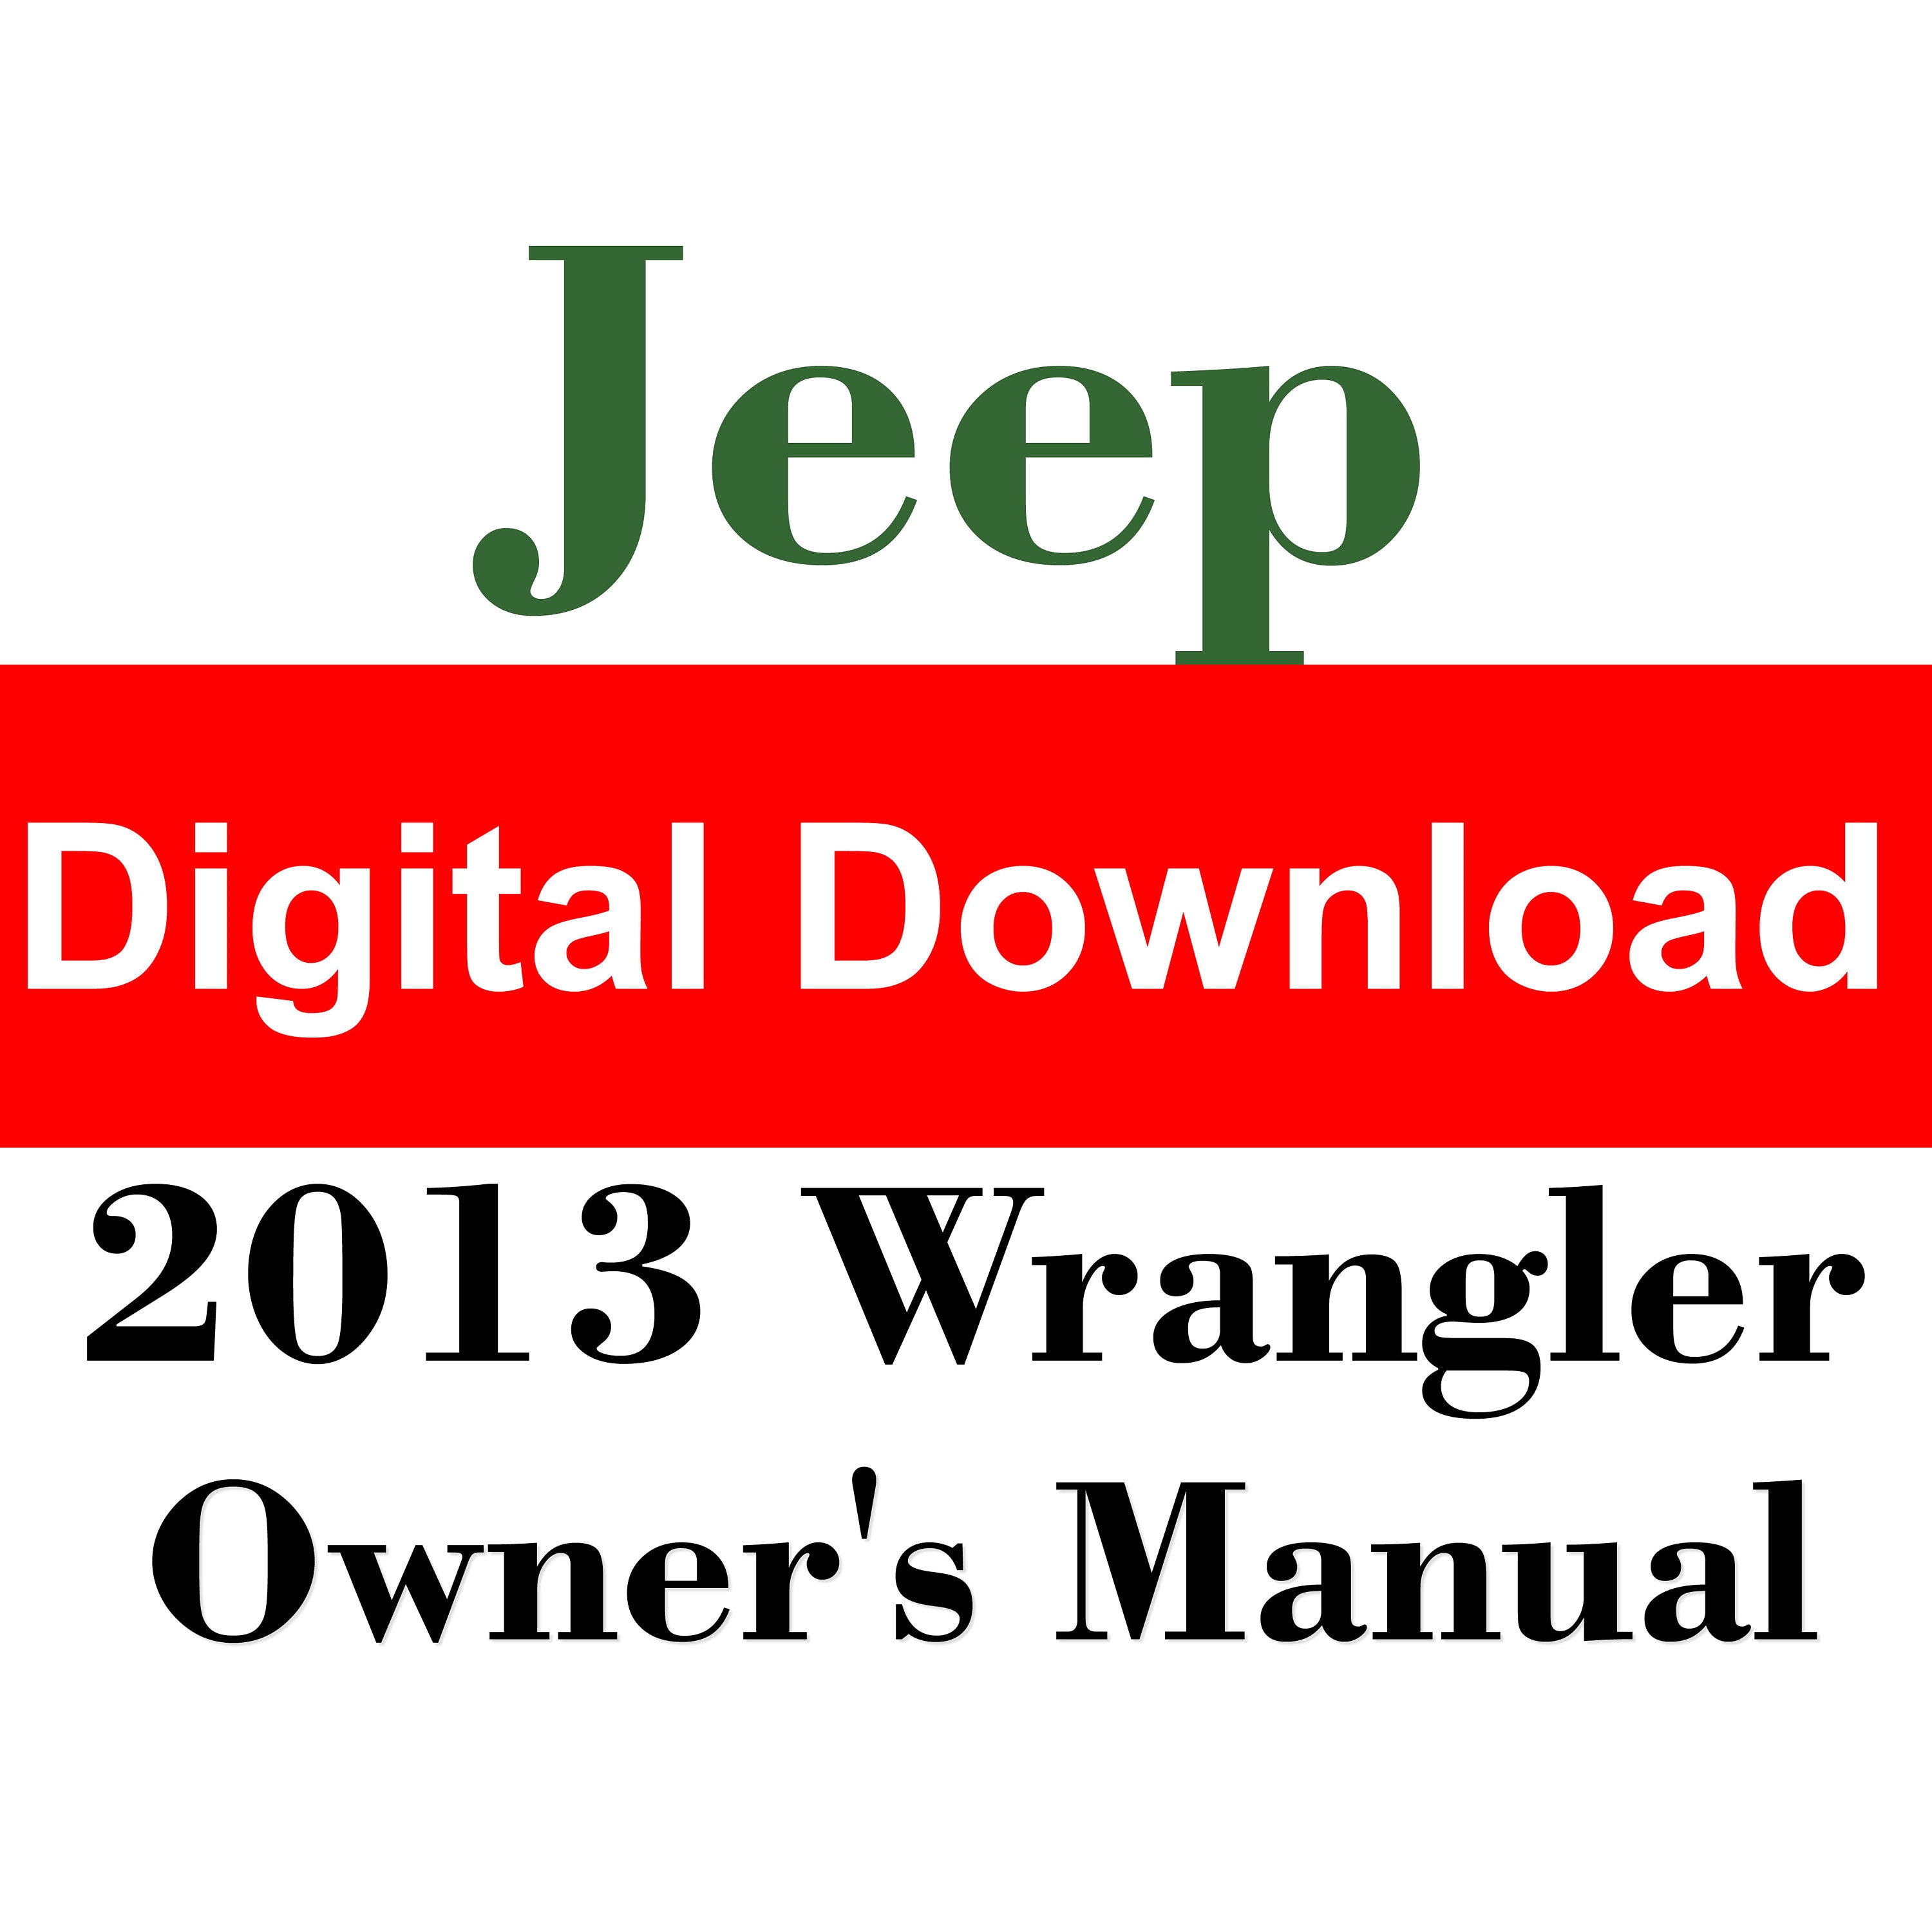 2013 Jeep Wrangler Owners Manual PDF Digital Download - Etsy